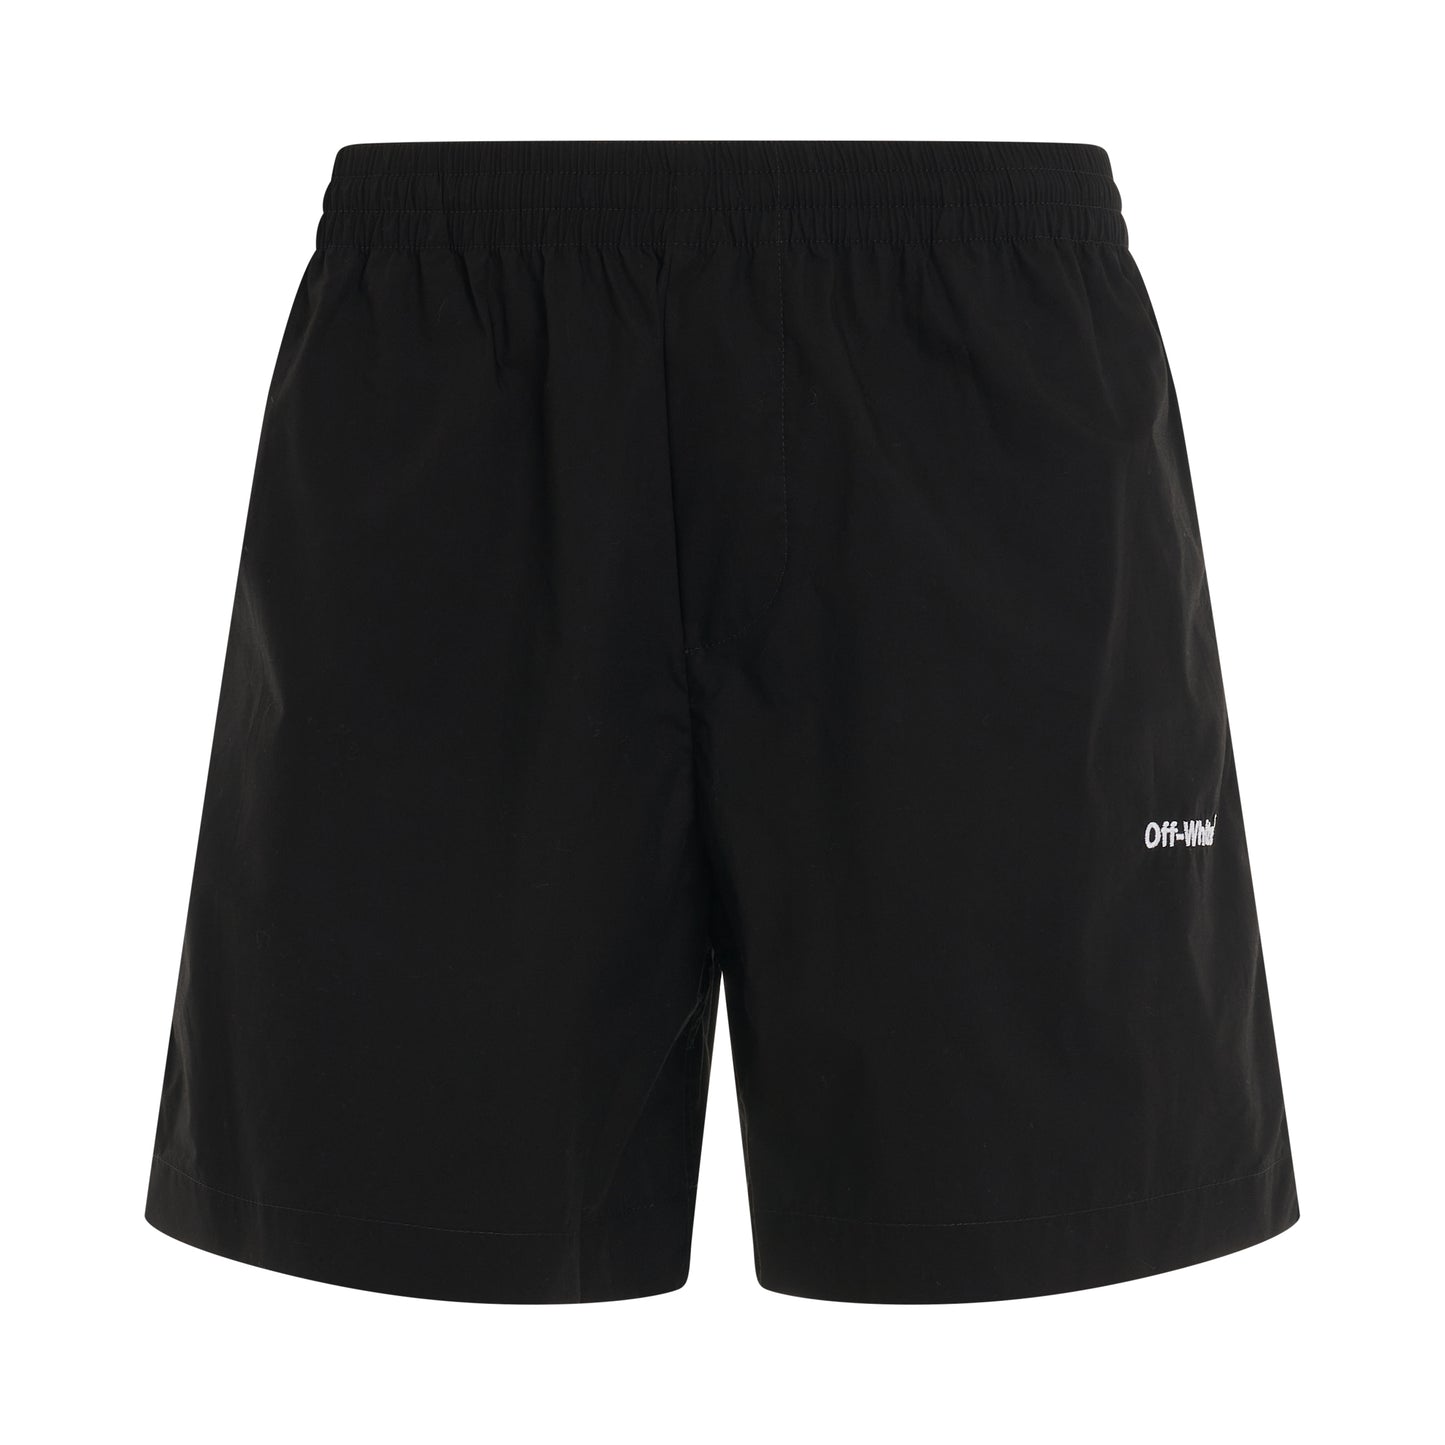 Arrow Outline Pajama Shorts in Black/White